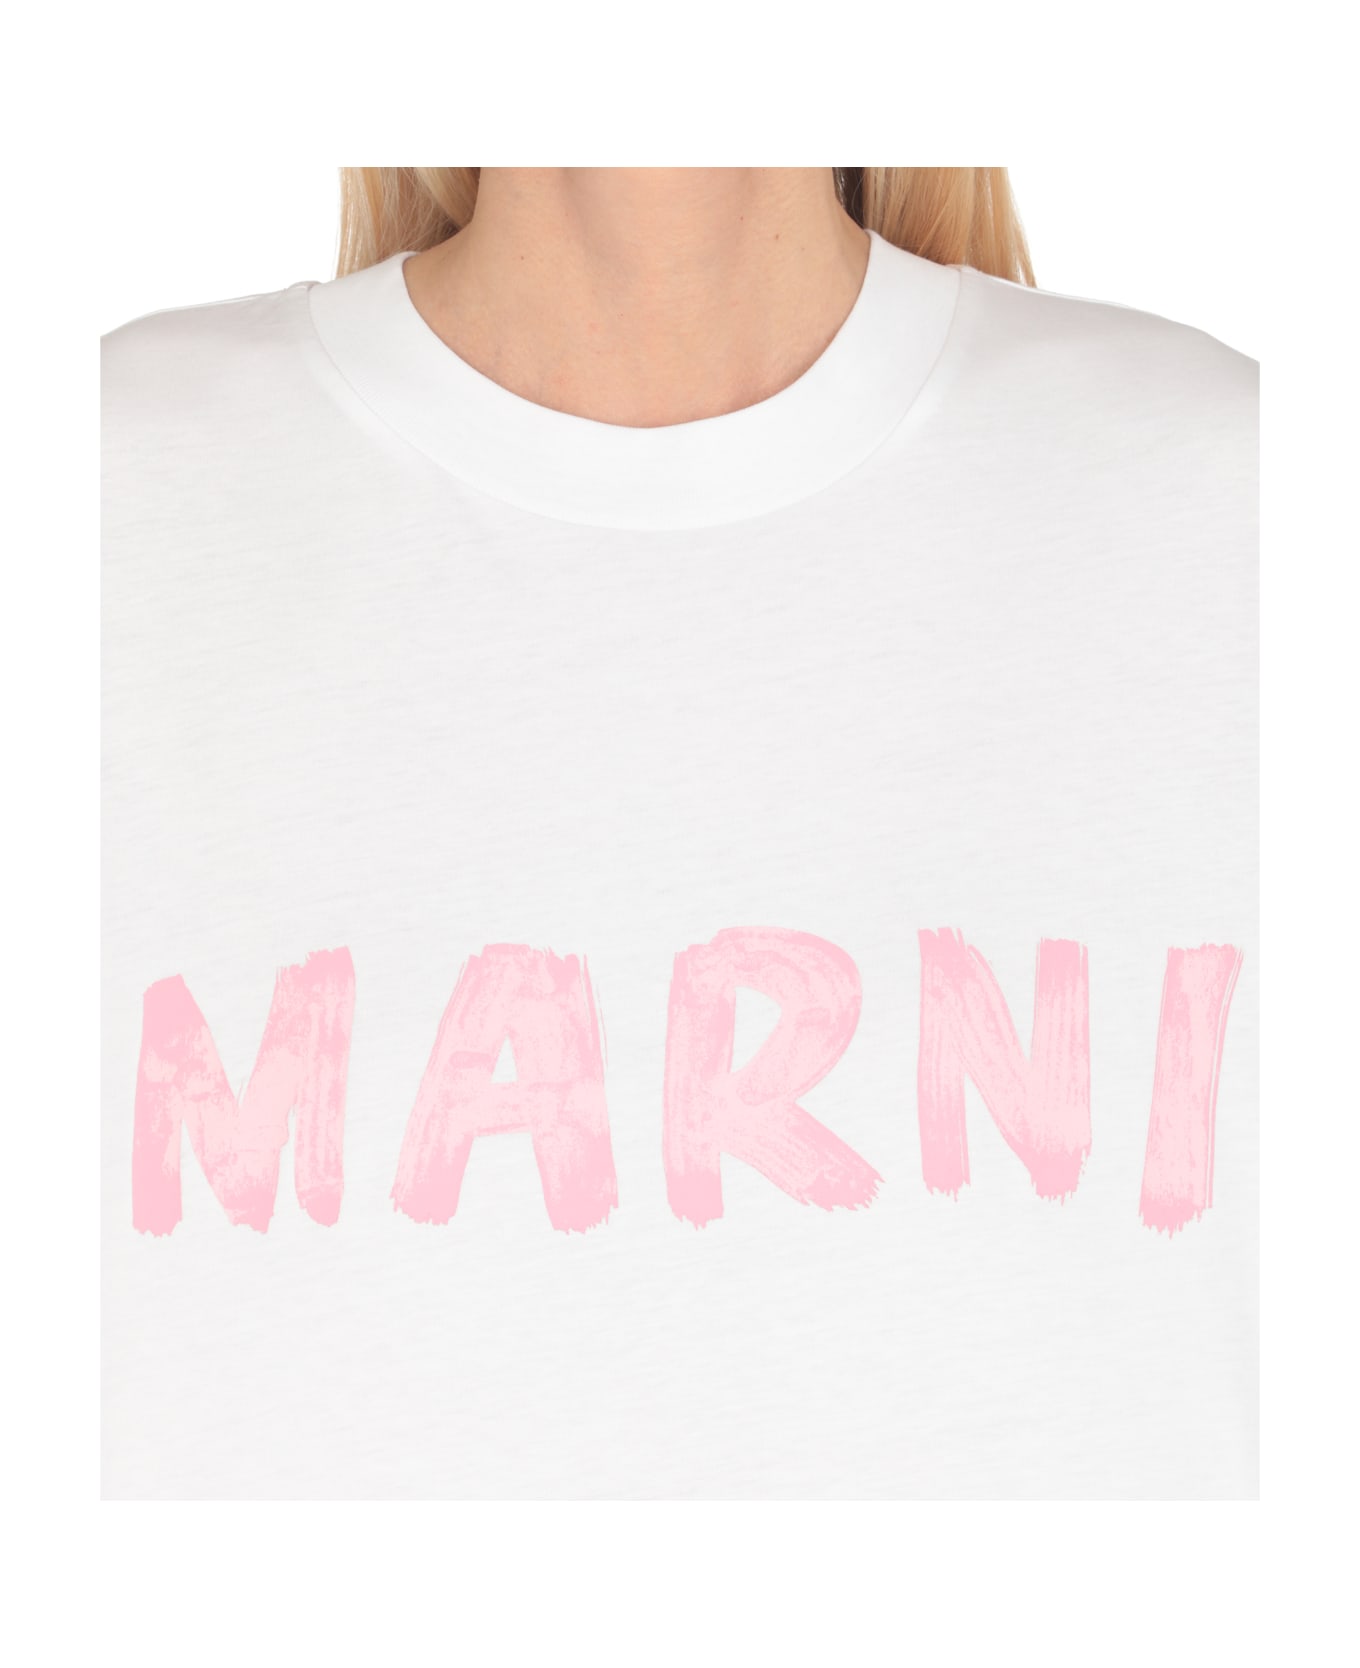 Marni T-shirt With Logo - White